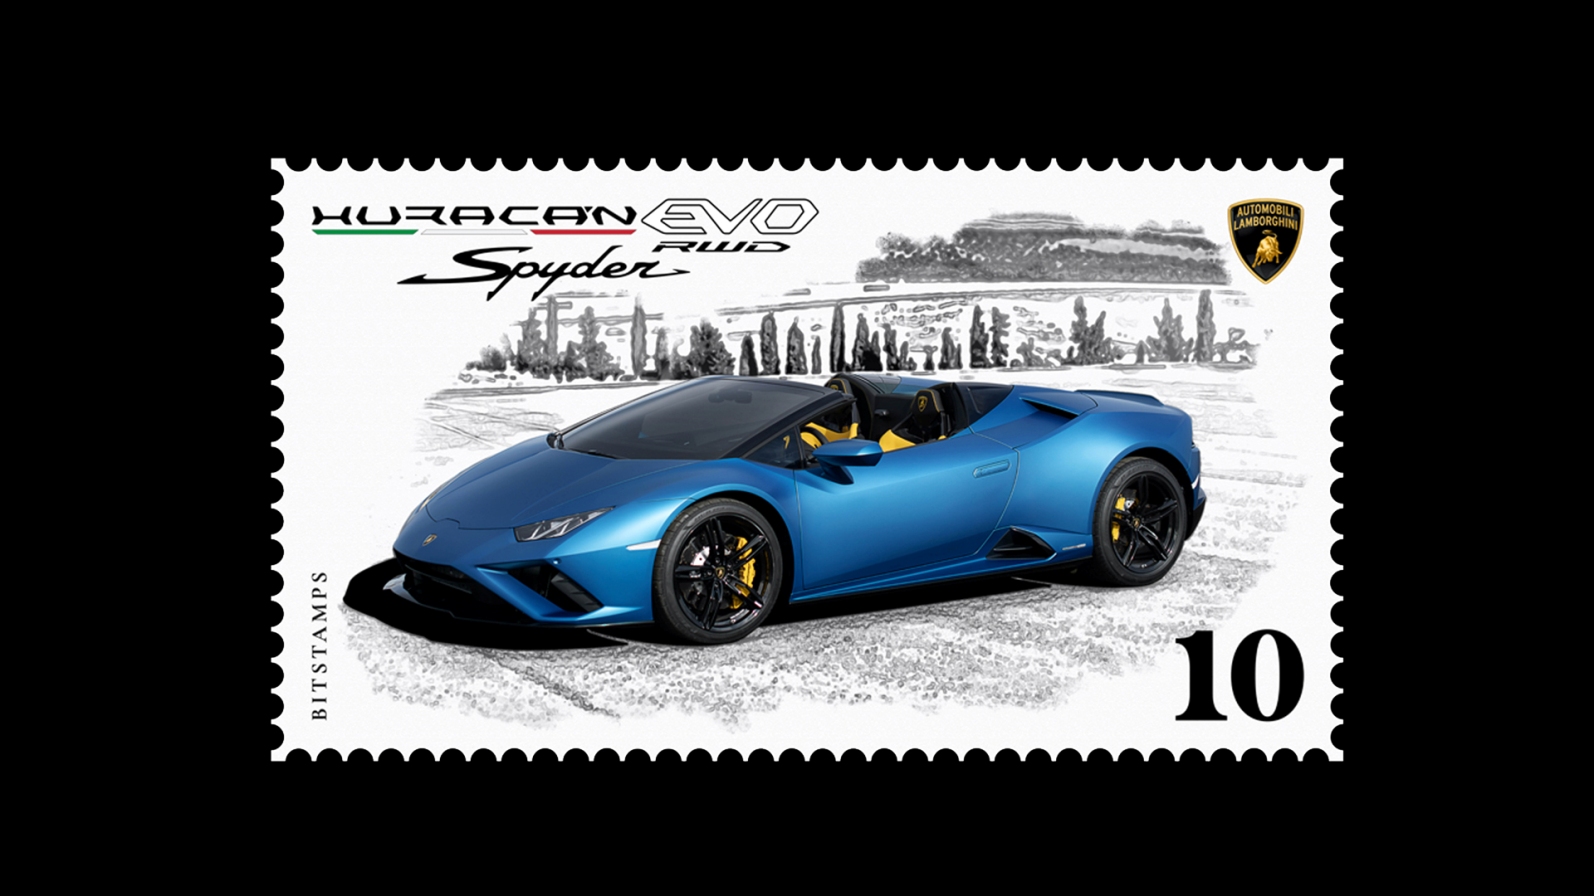 Automobili Lamborghini Launches Its First Collector’s Digital Stamp